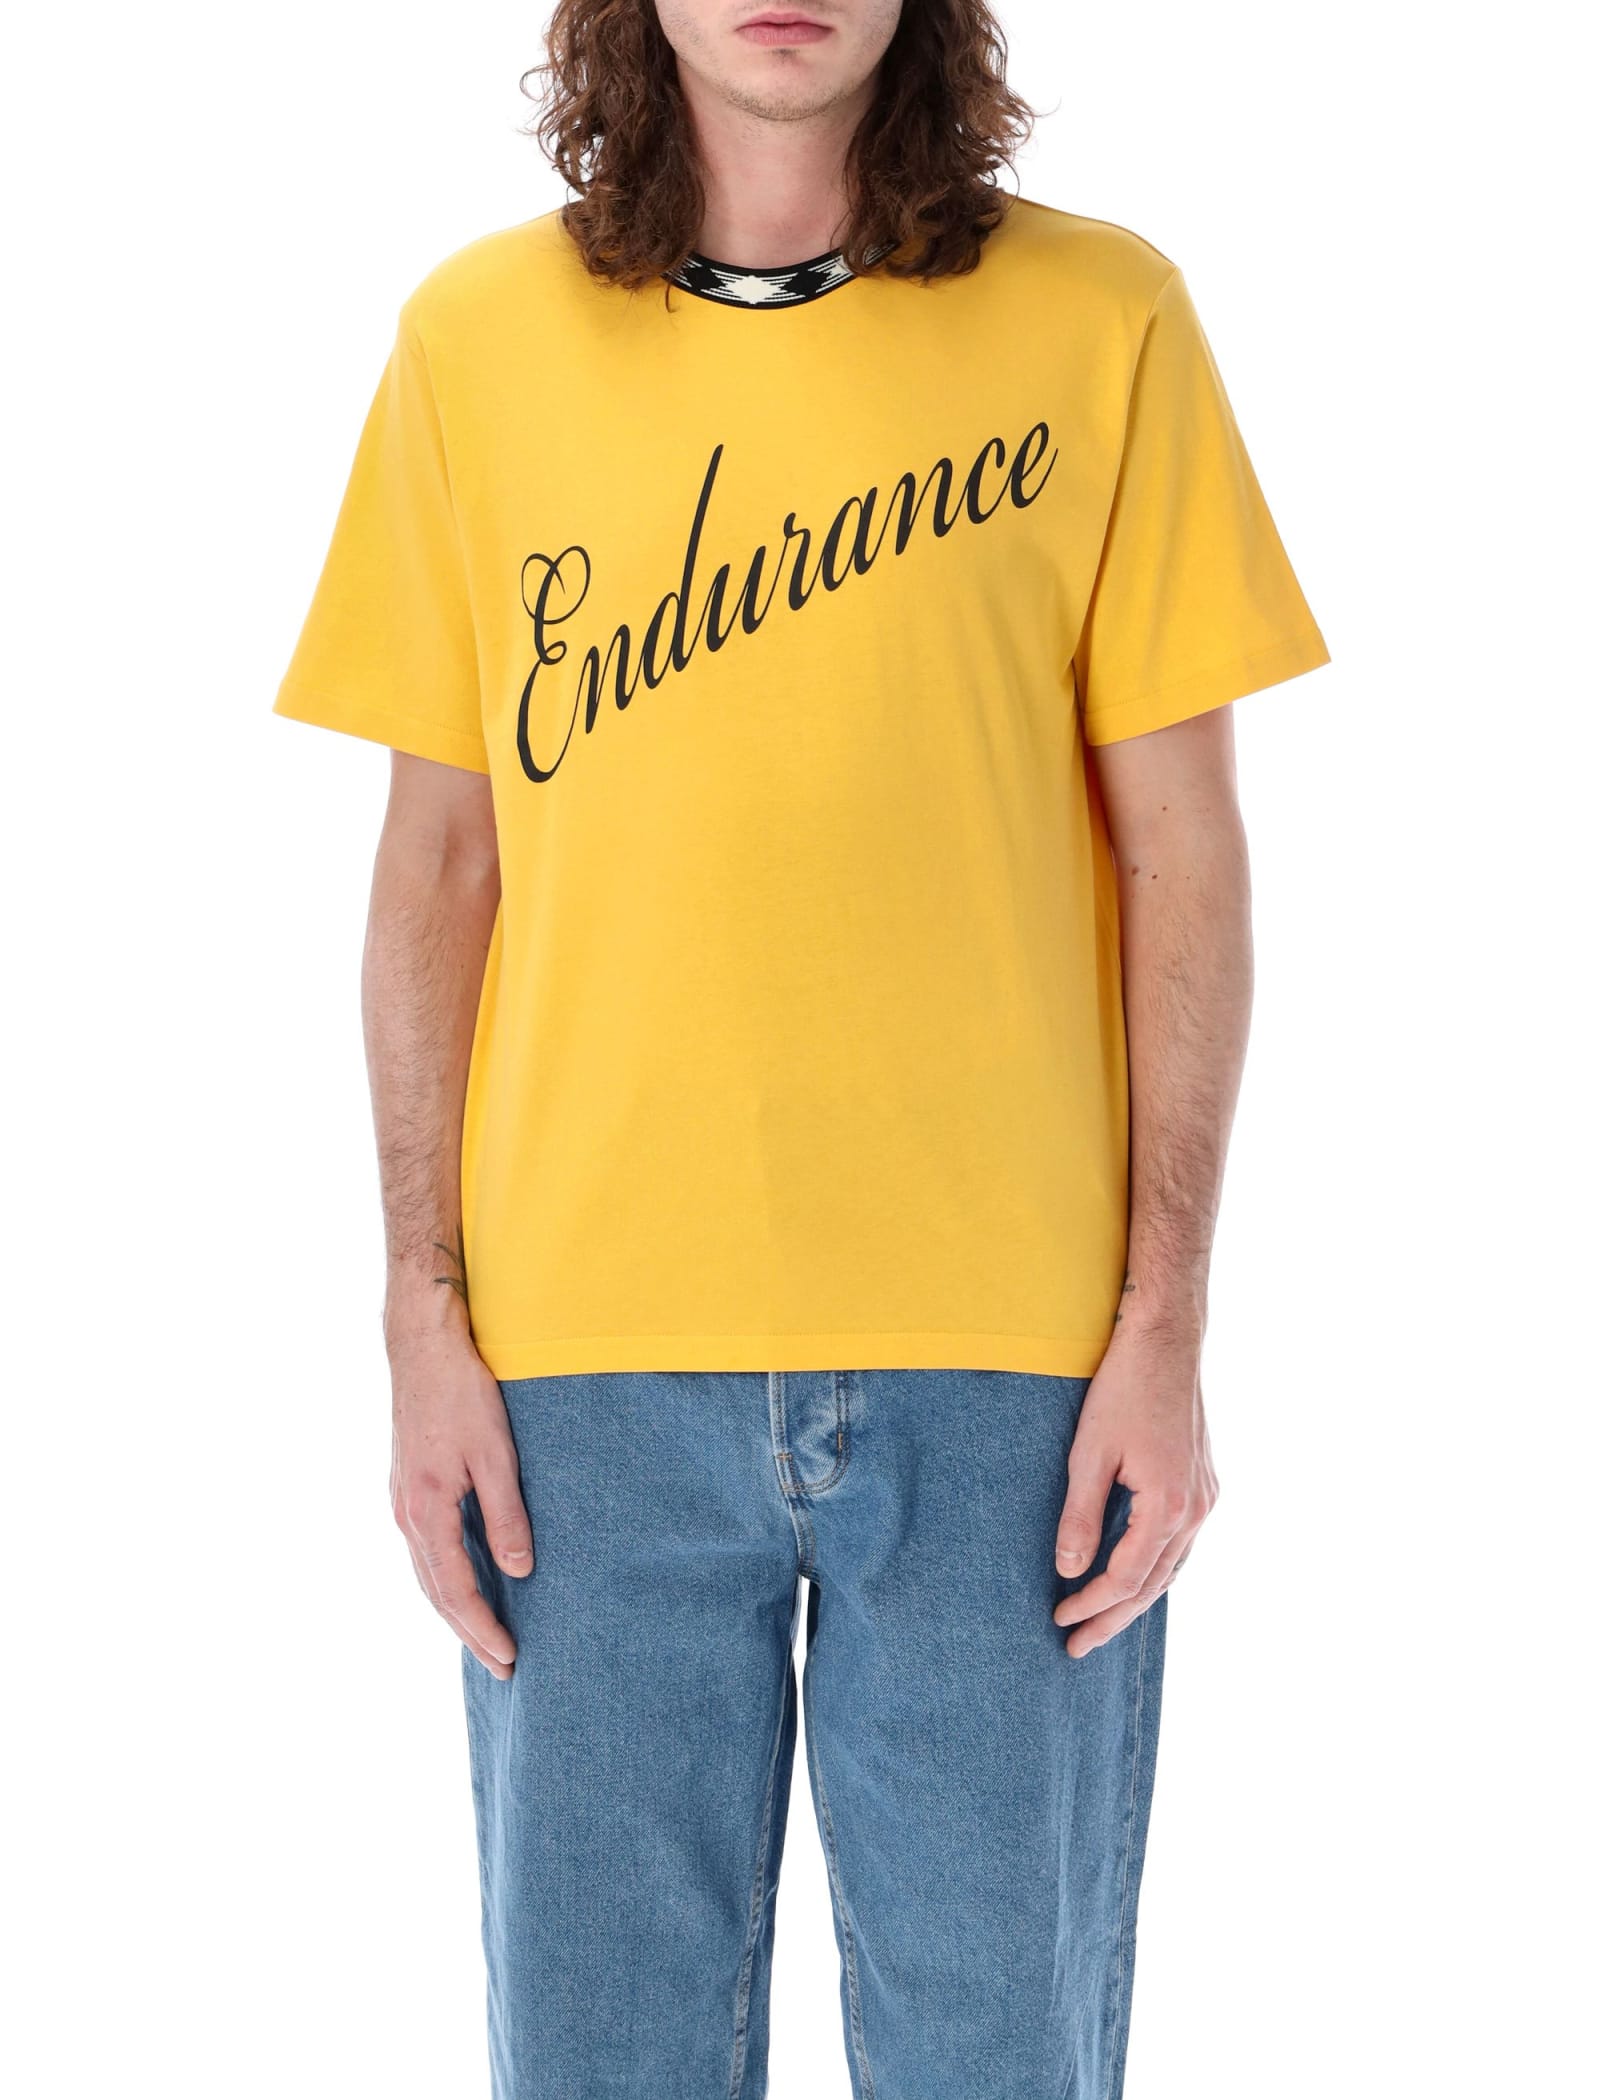 Endurance T-shirt